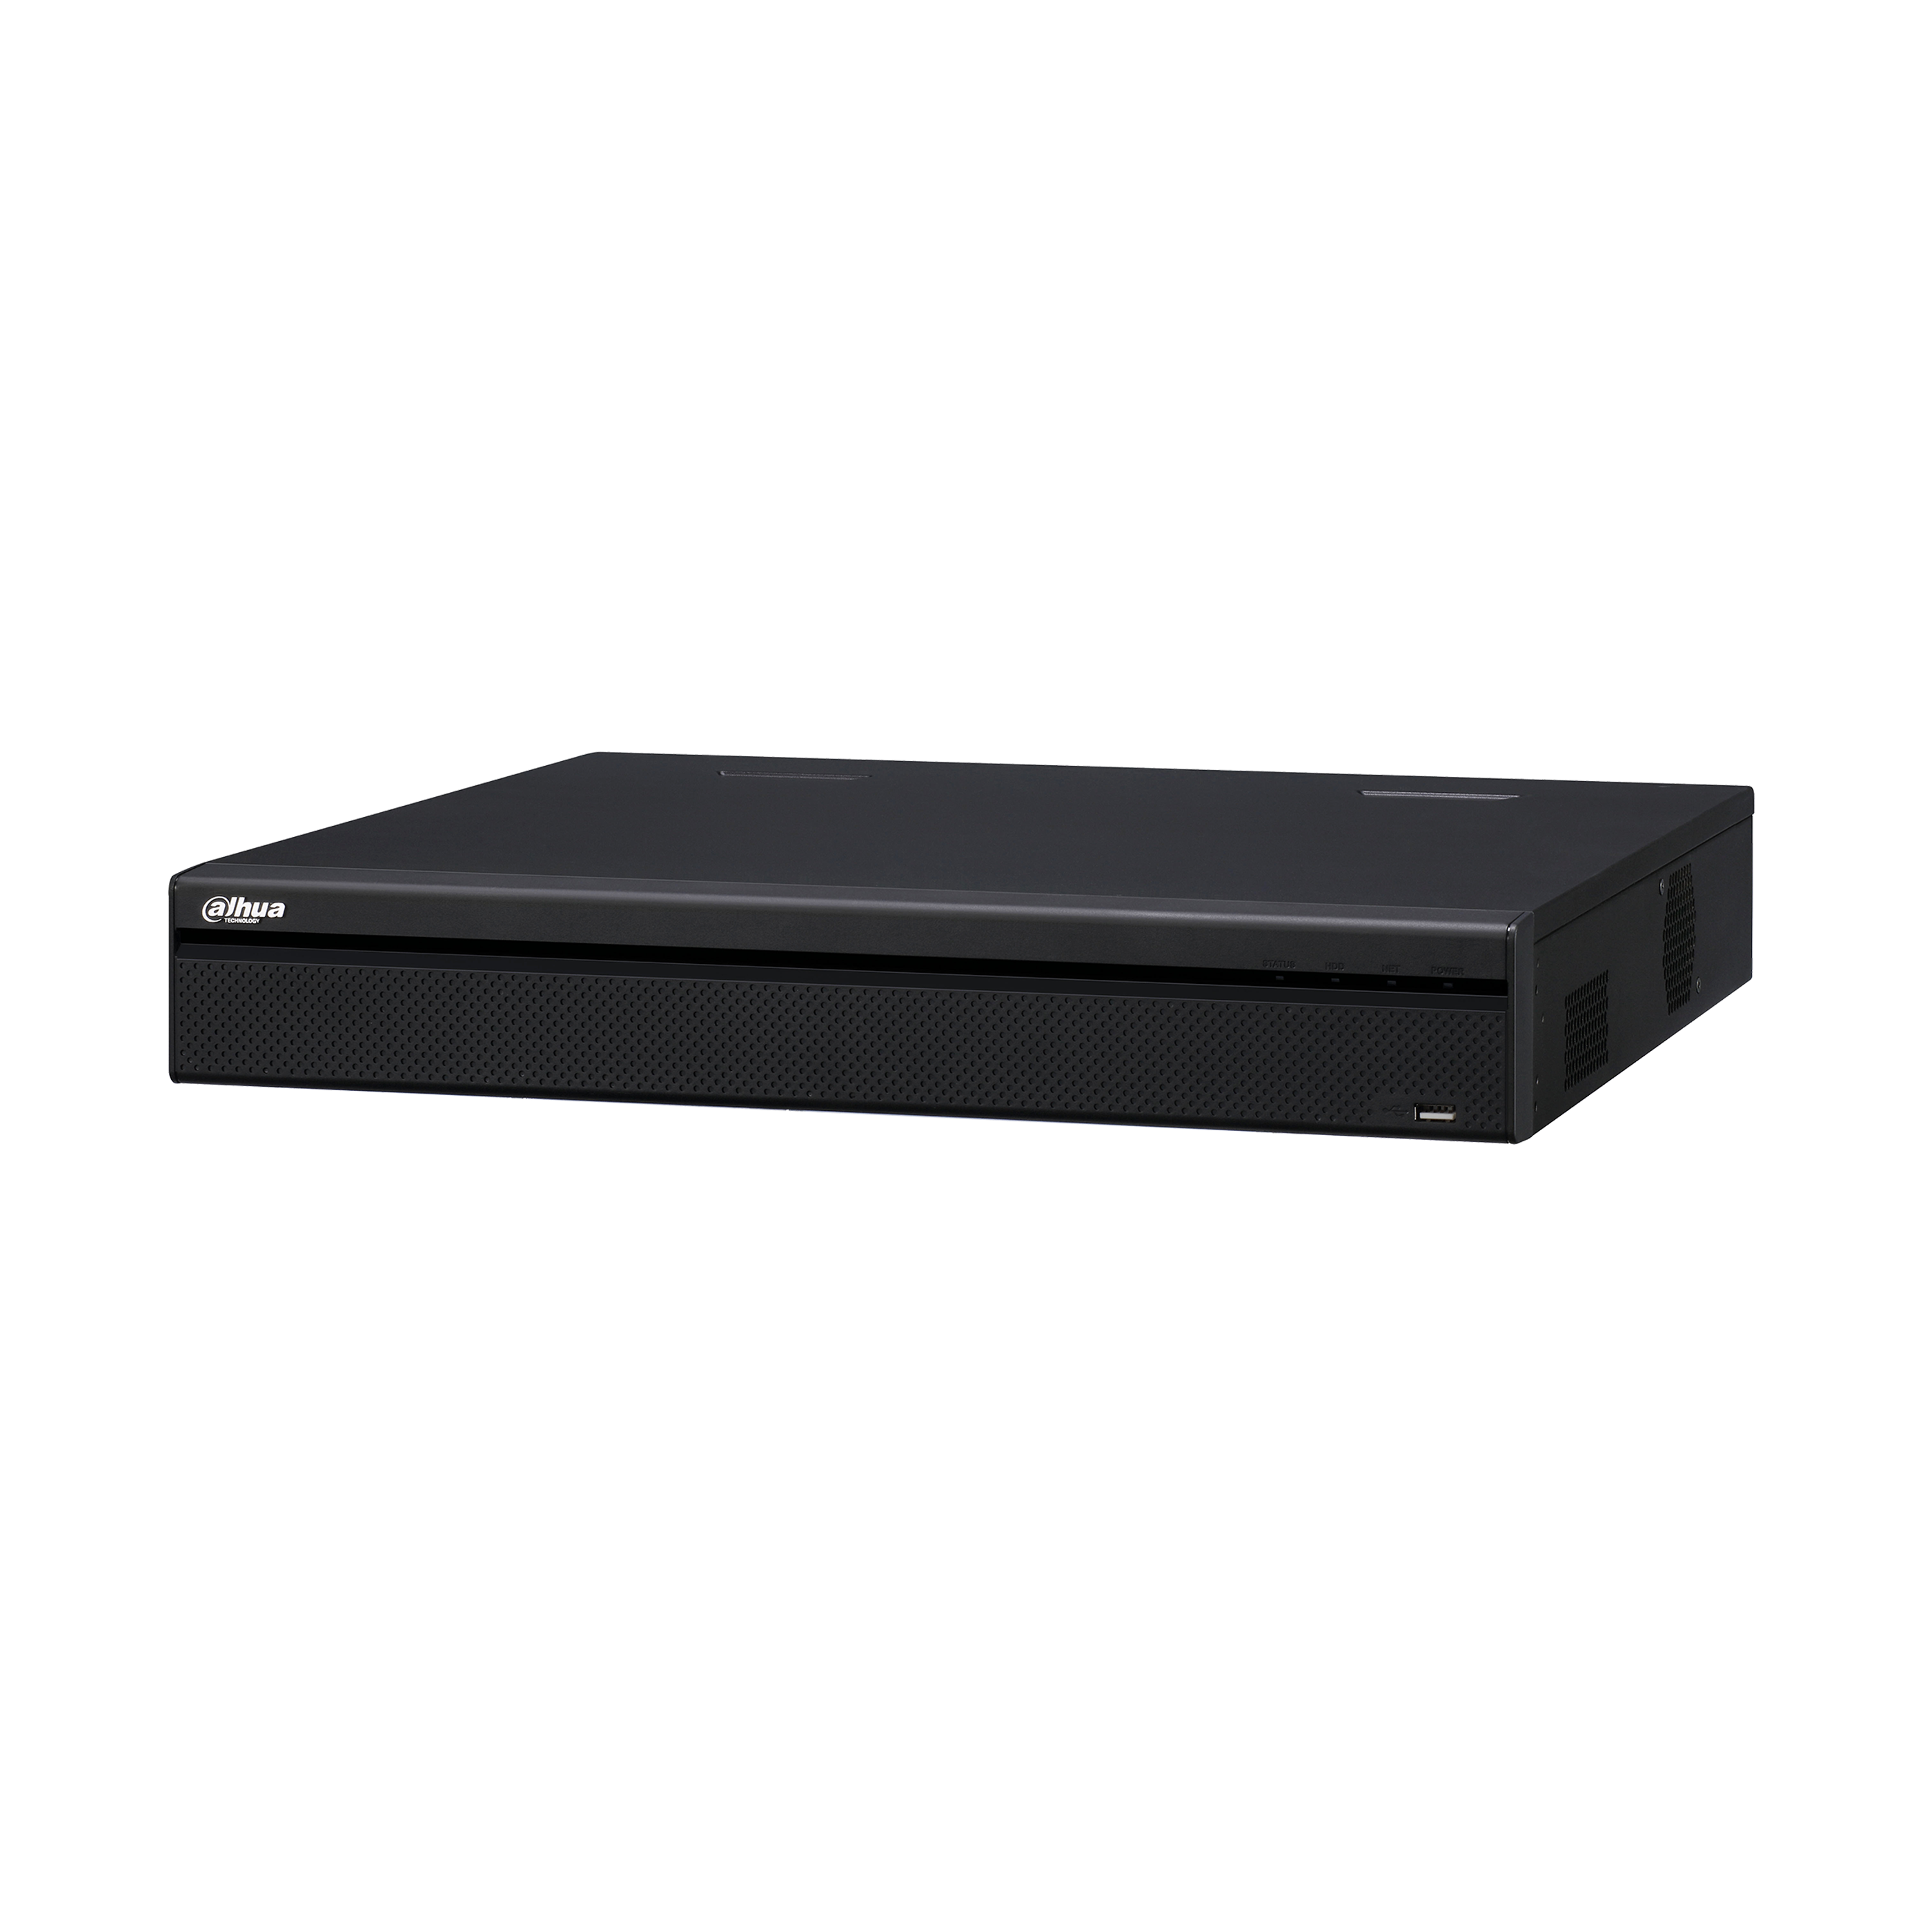 Dahua 16CH Tribrid 1080P 1U DVR Supports HD-CVI,Analog,HD-TVI AHD & IP Cameras 